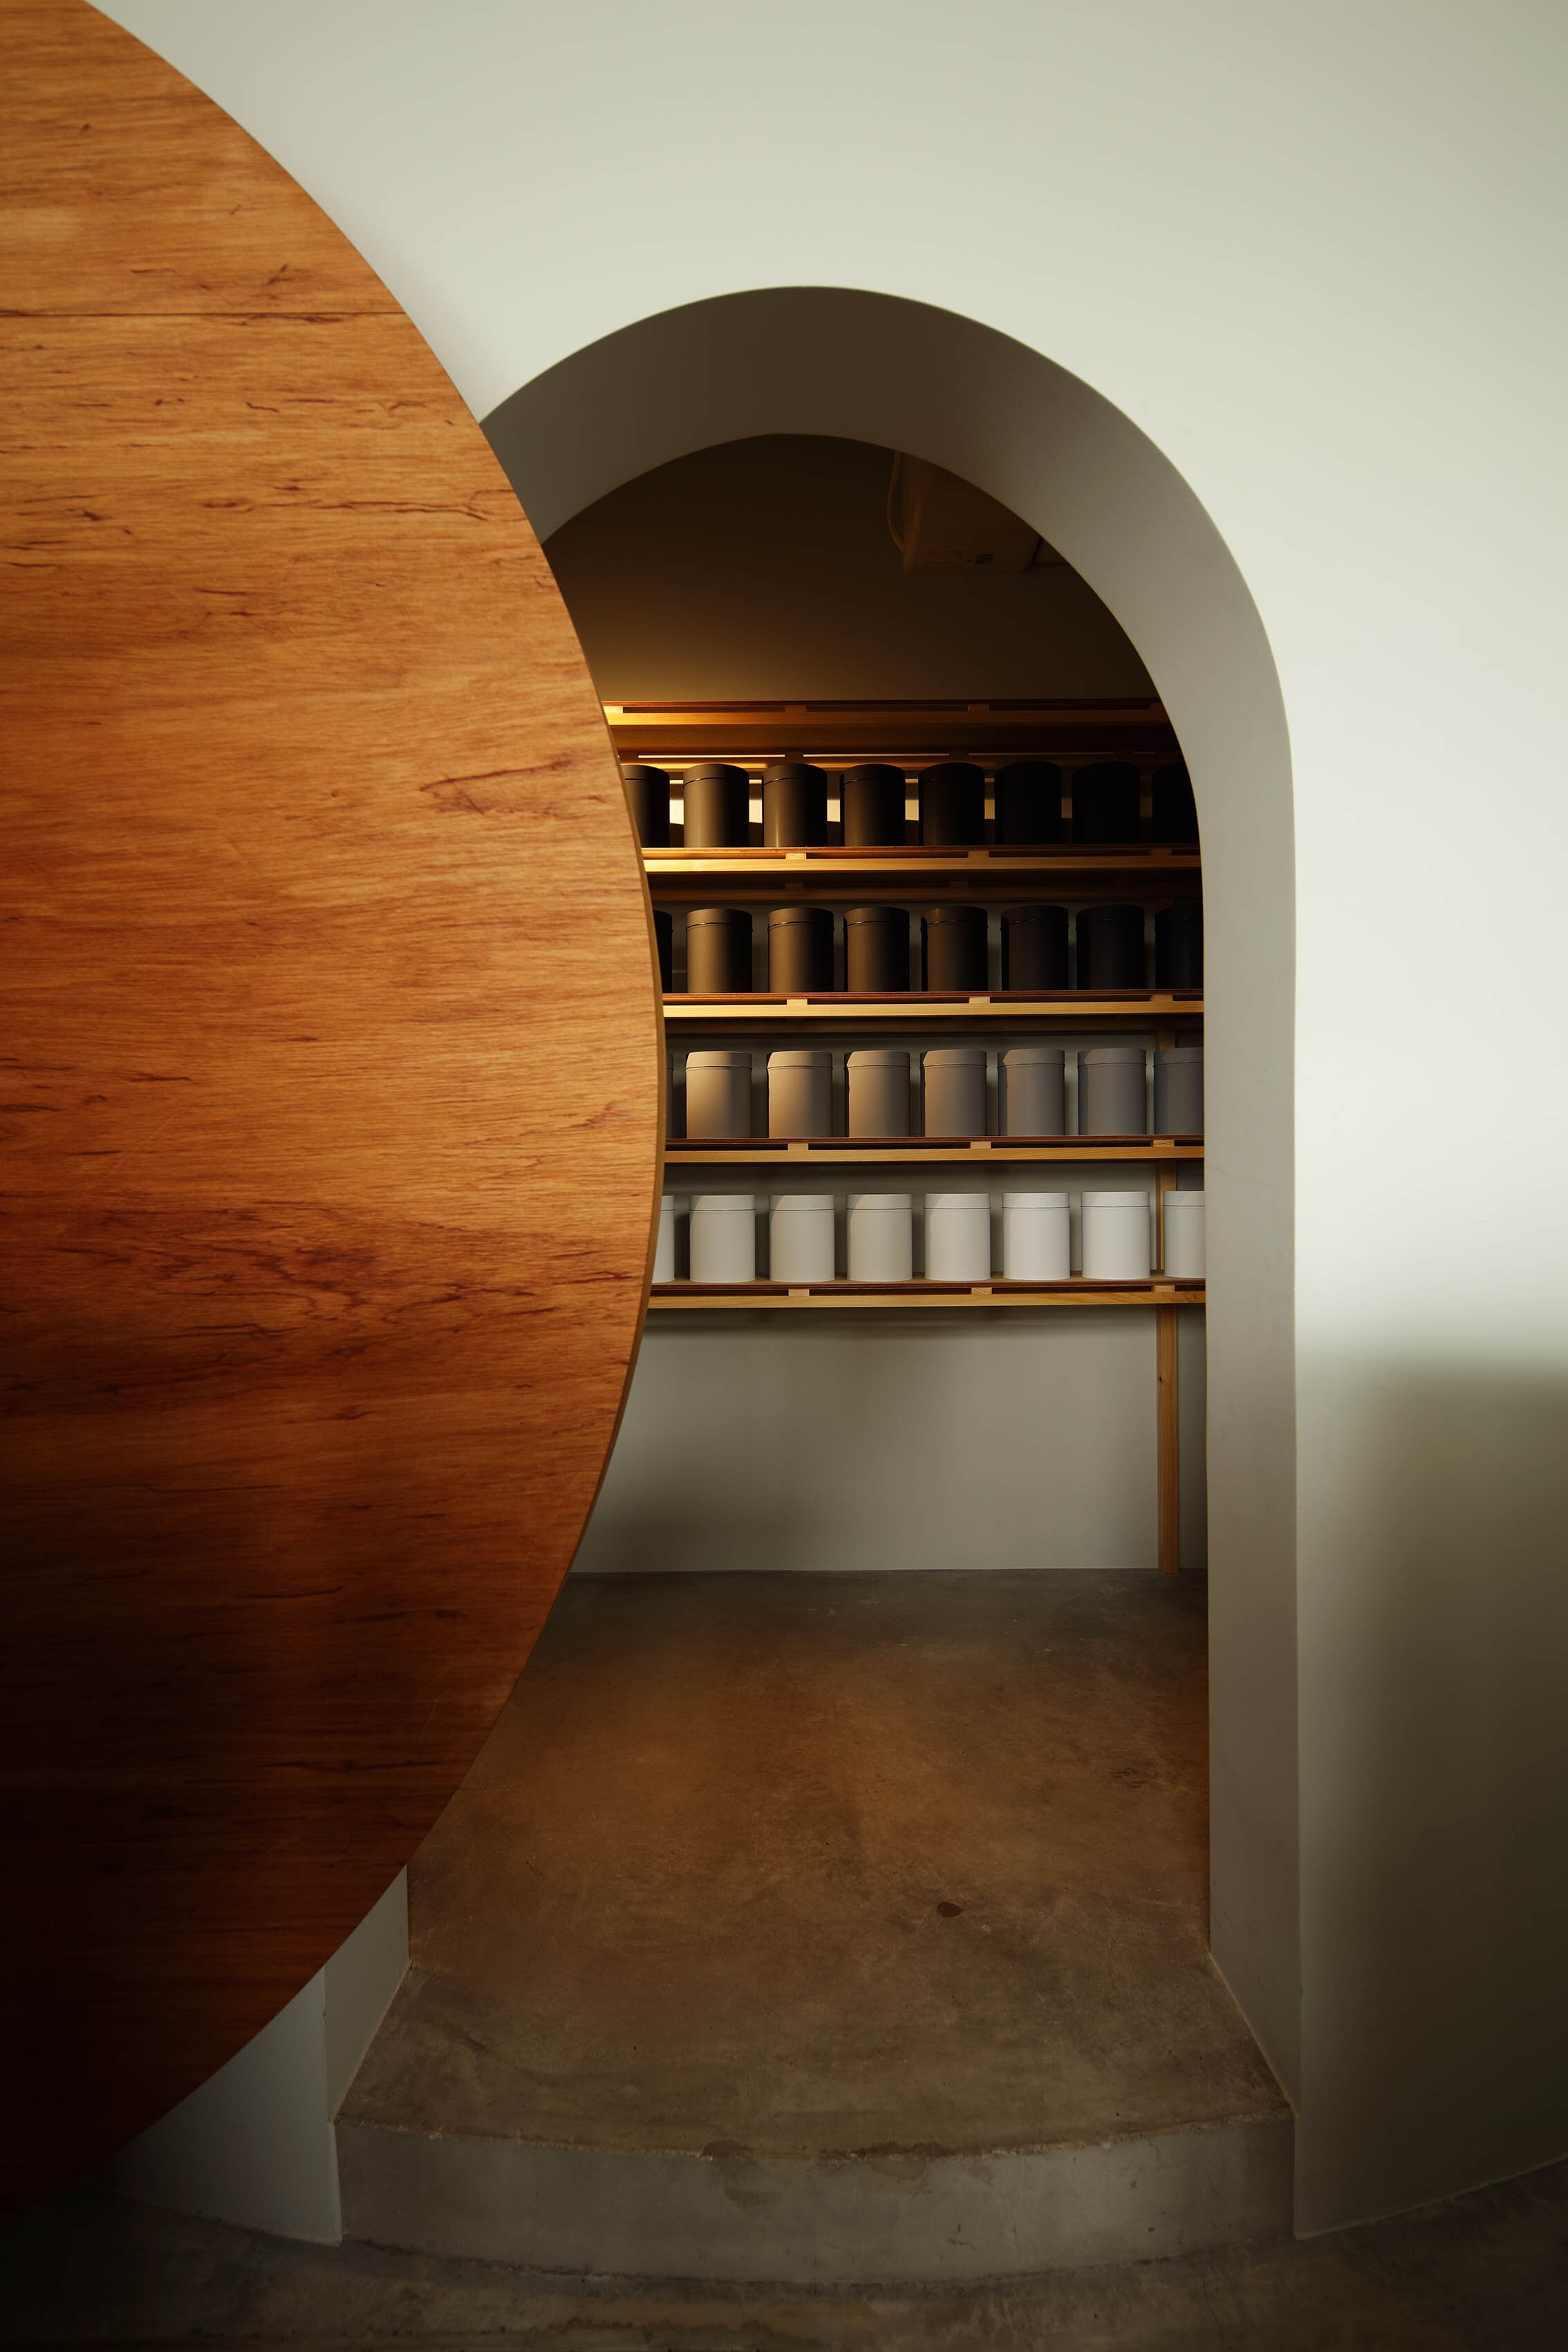  Yusuke Seki Studioの関祐介がデザインしたカフェOgawa Coffee Laboratoryの貯蔵庫 